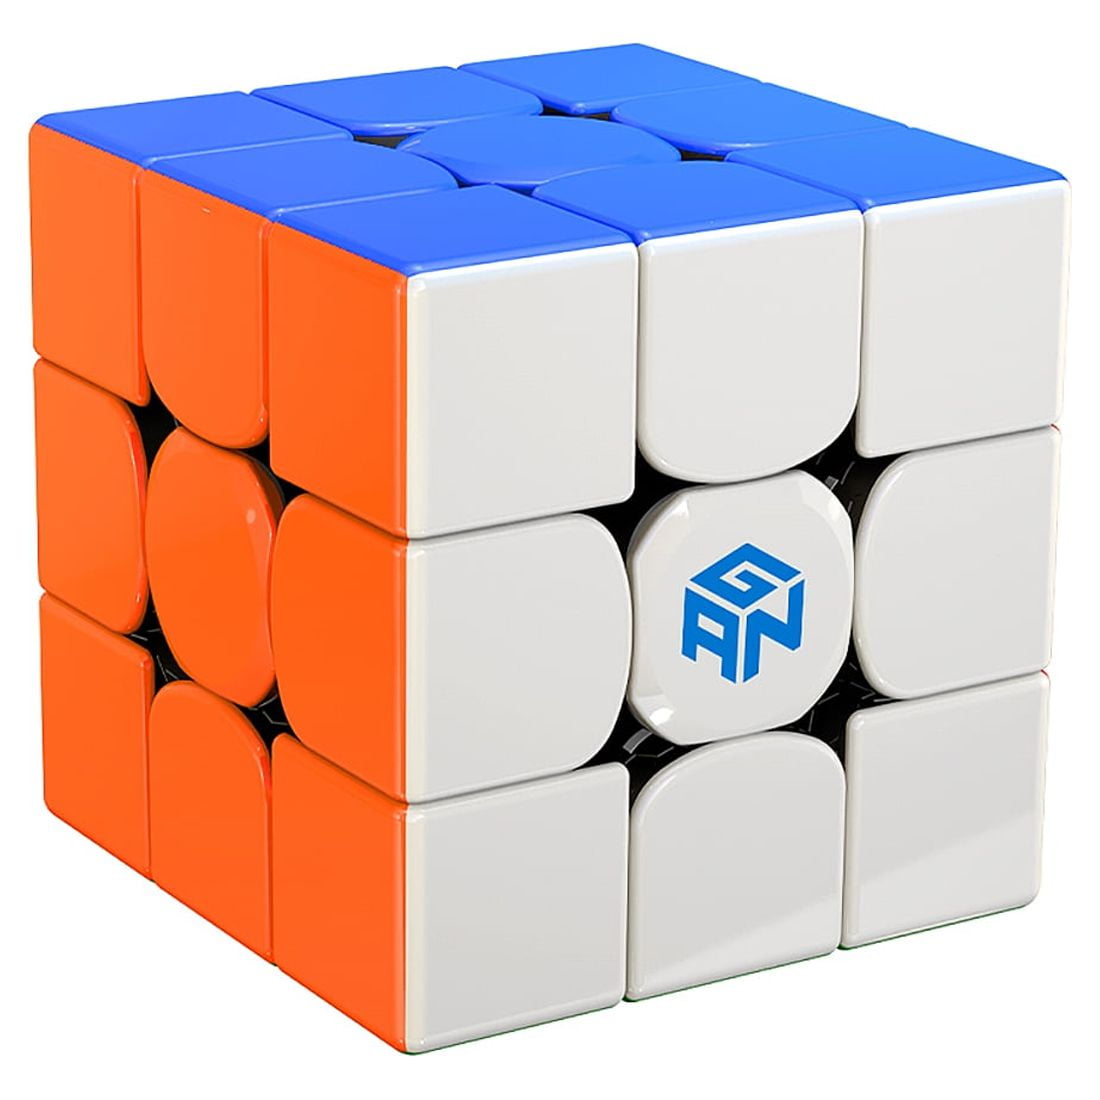 Rubik's Cube, The Original 3x3 Colour-Matching Puzzle, Classic